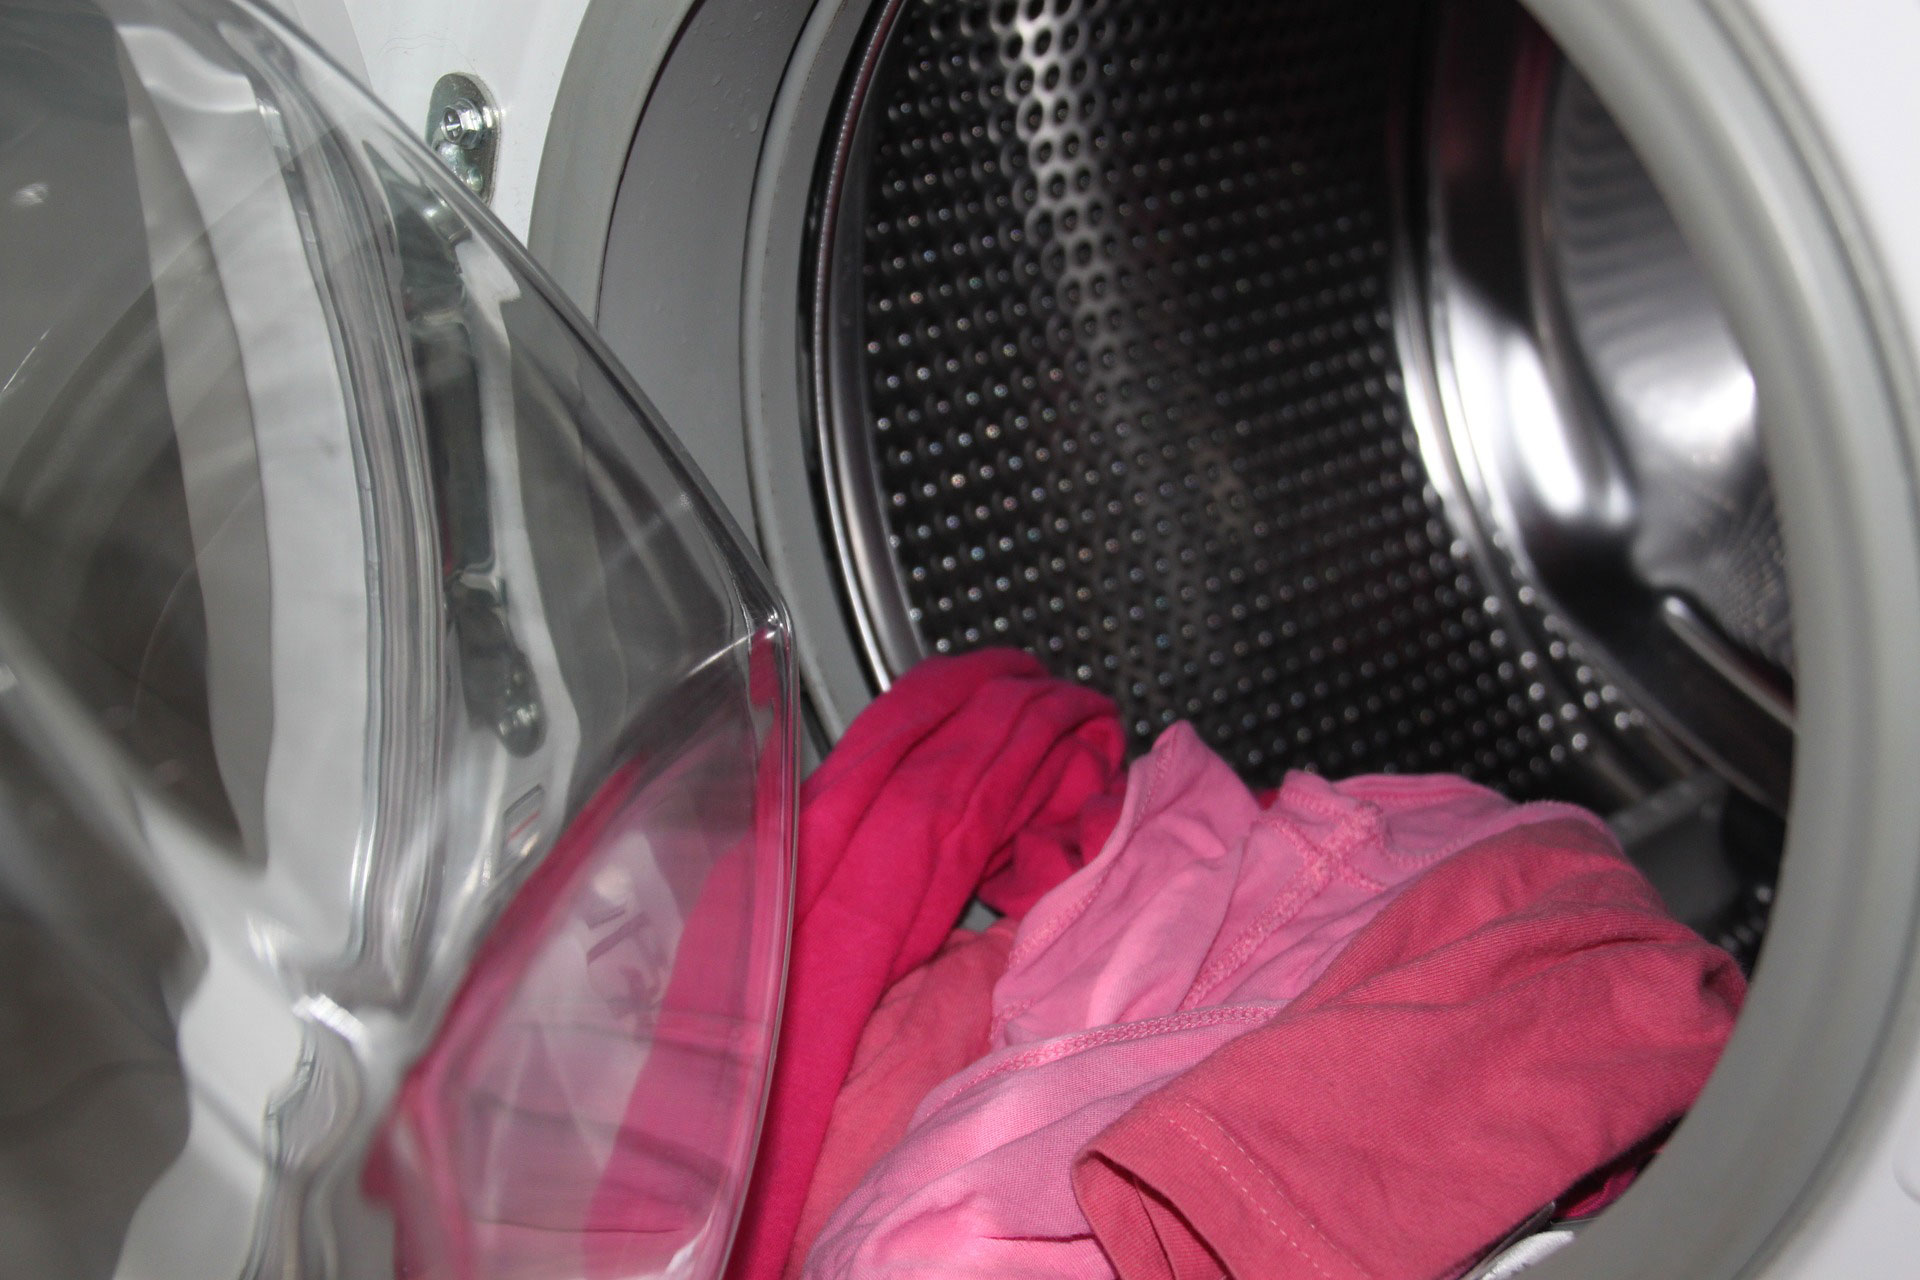 Can washing machine damage clothes